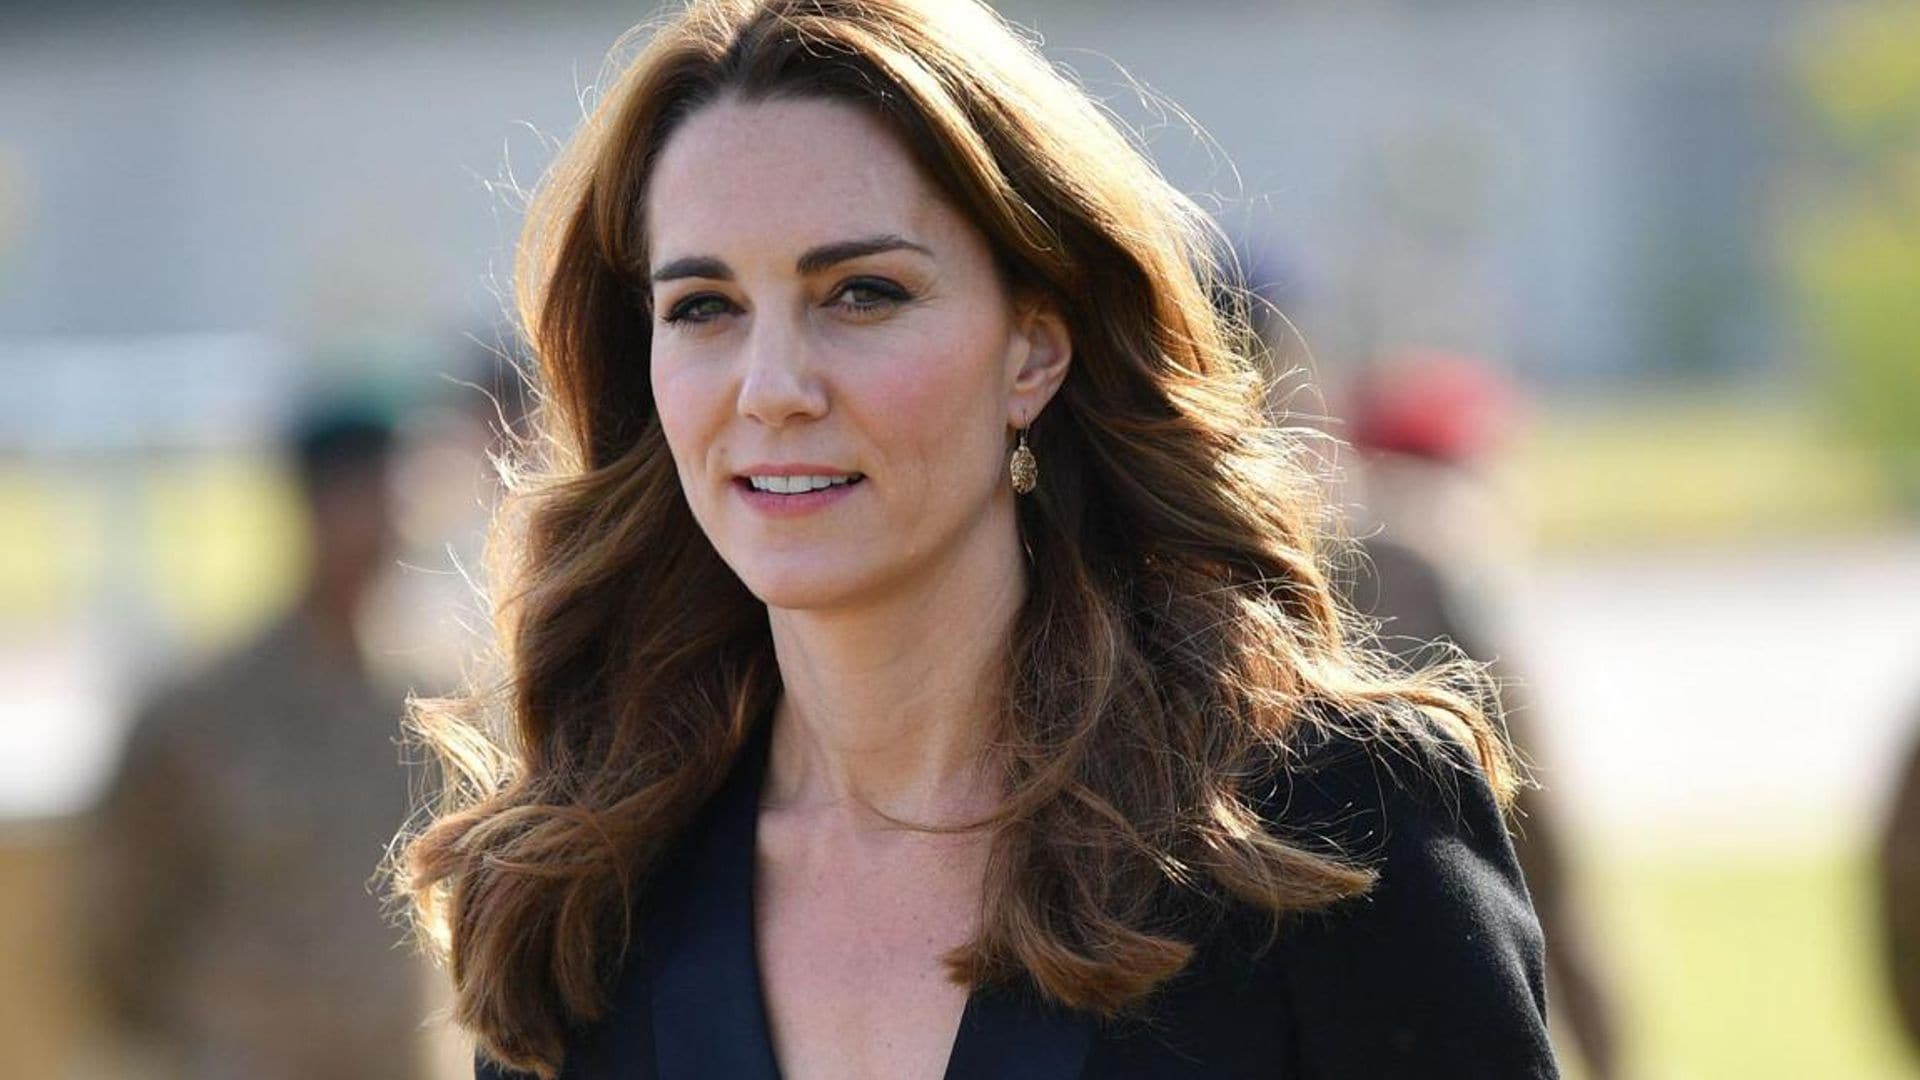 Kate Middleton is ‘hugely grateful’ to flight crew for landing safely after plane incident